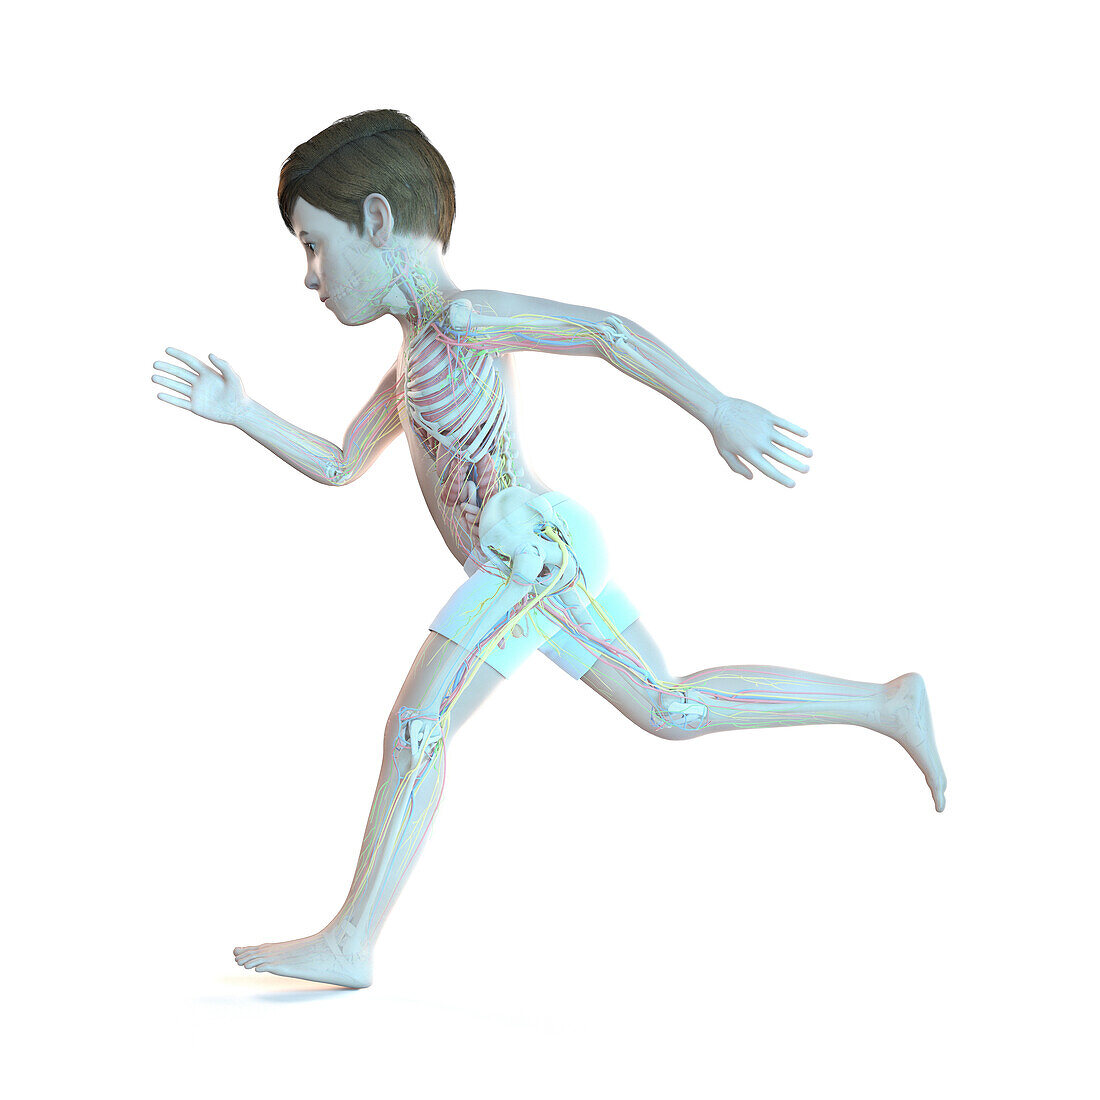 Illustration of a boy's anatomy